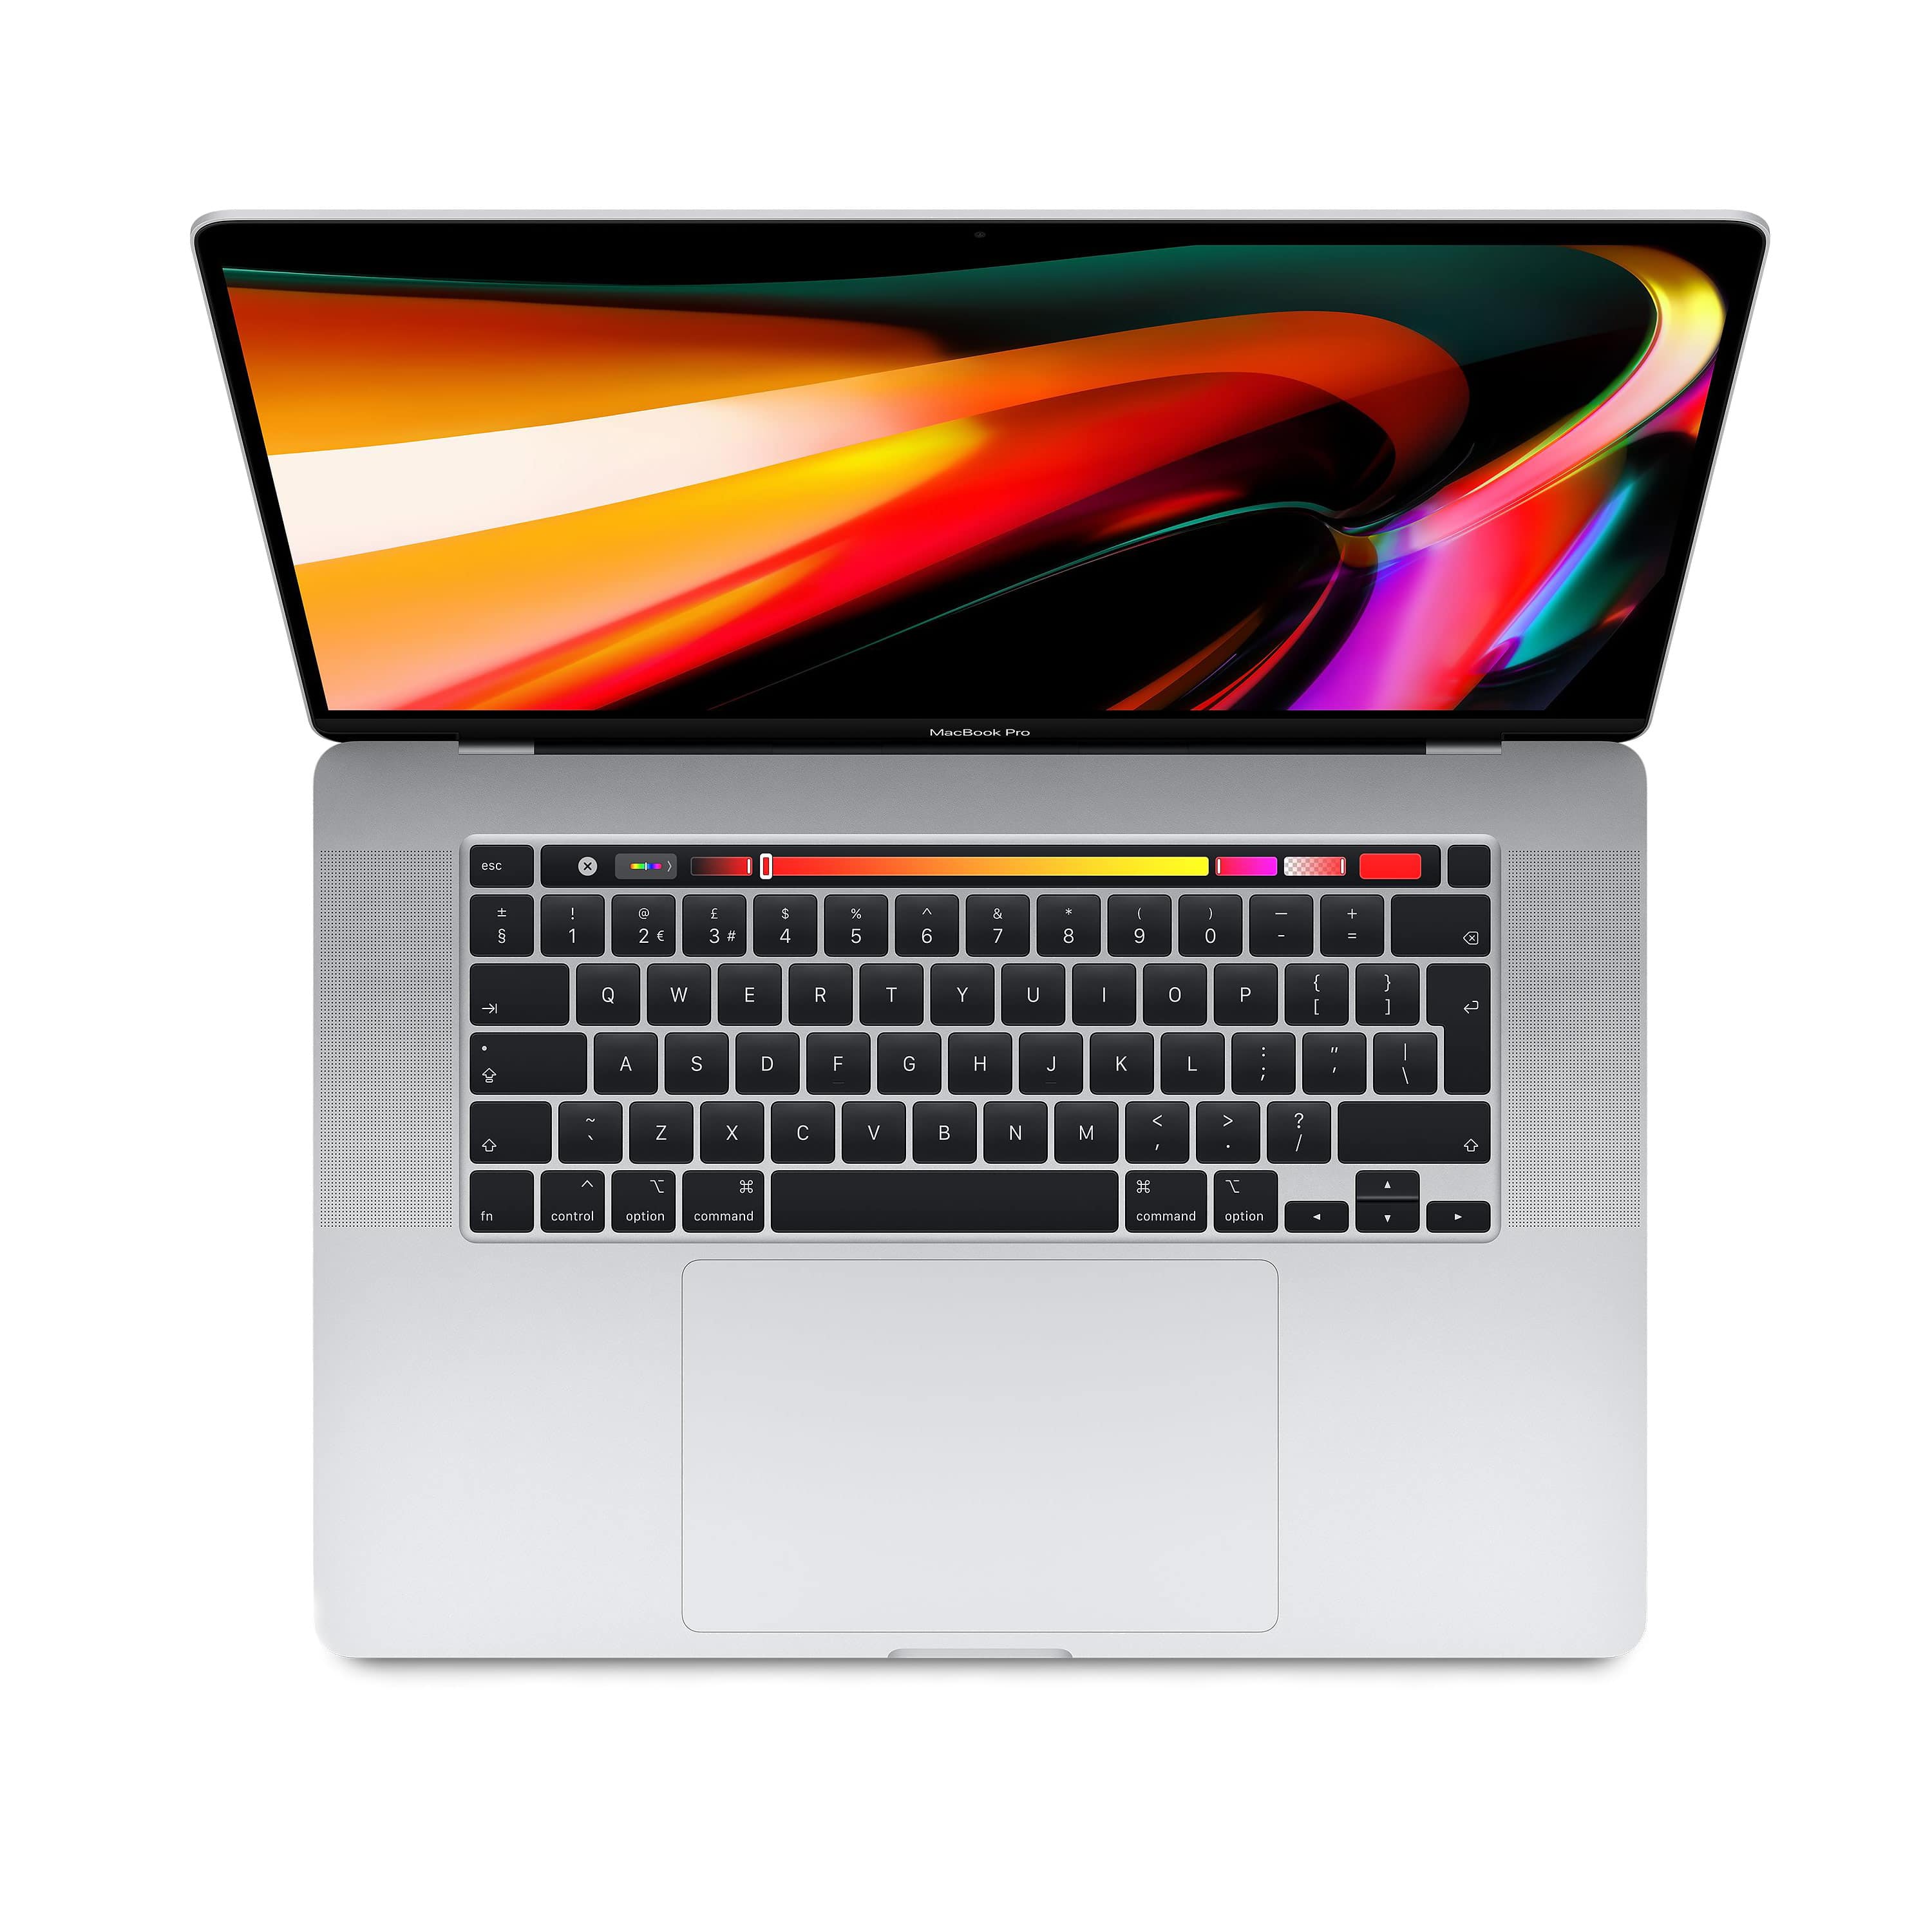 Apple MacBook Pro (16-inch, 2.6Ghz Quad-Core i7, 16GB RAM, 1TB SSD Storage) - Silver